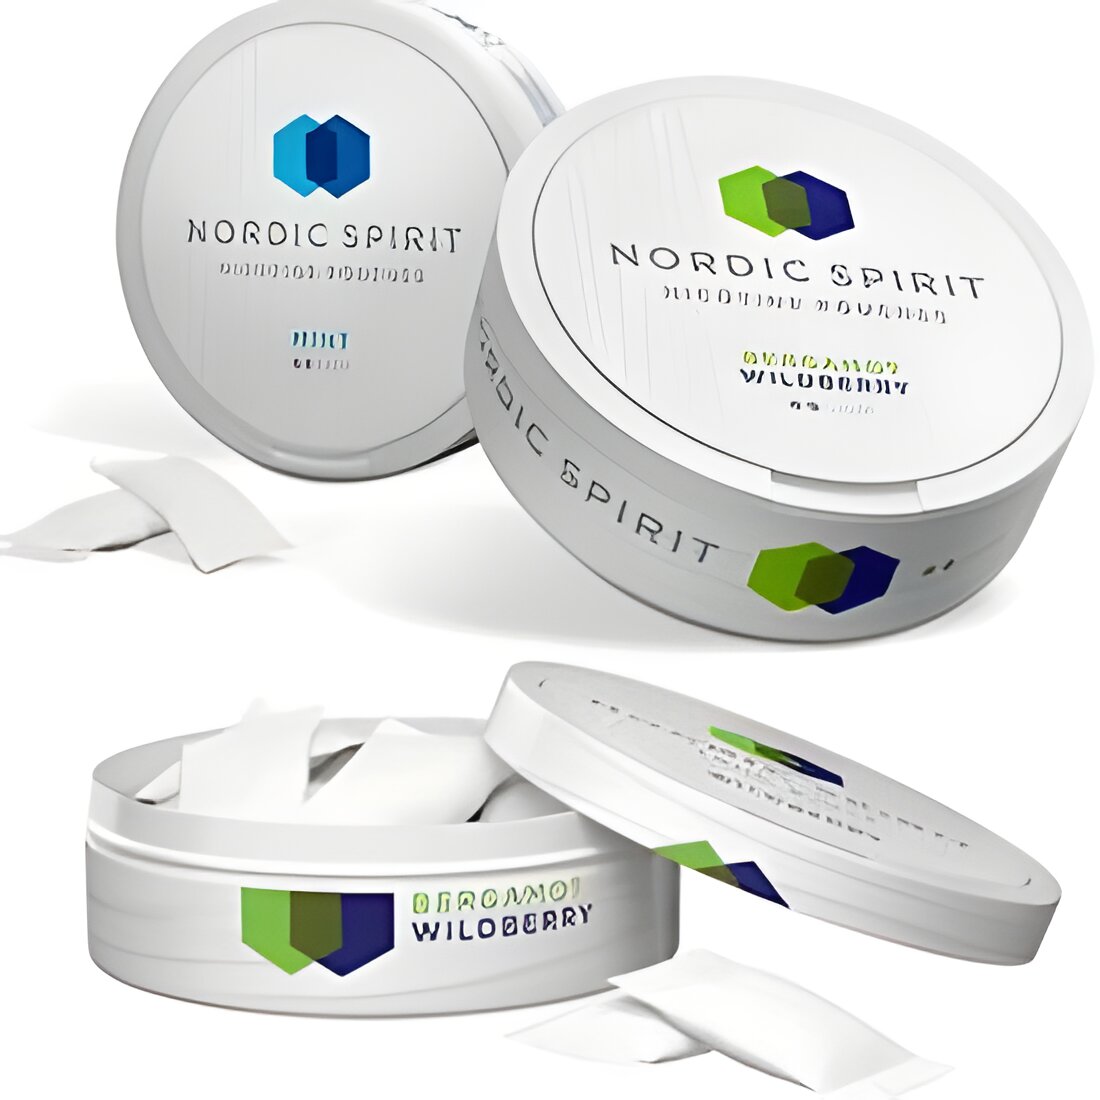 Free Nordic Spirit Mint Pouches